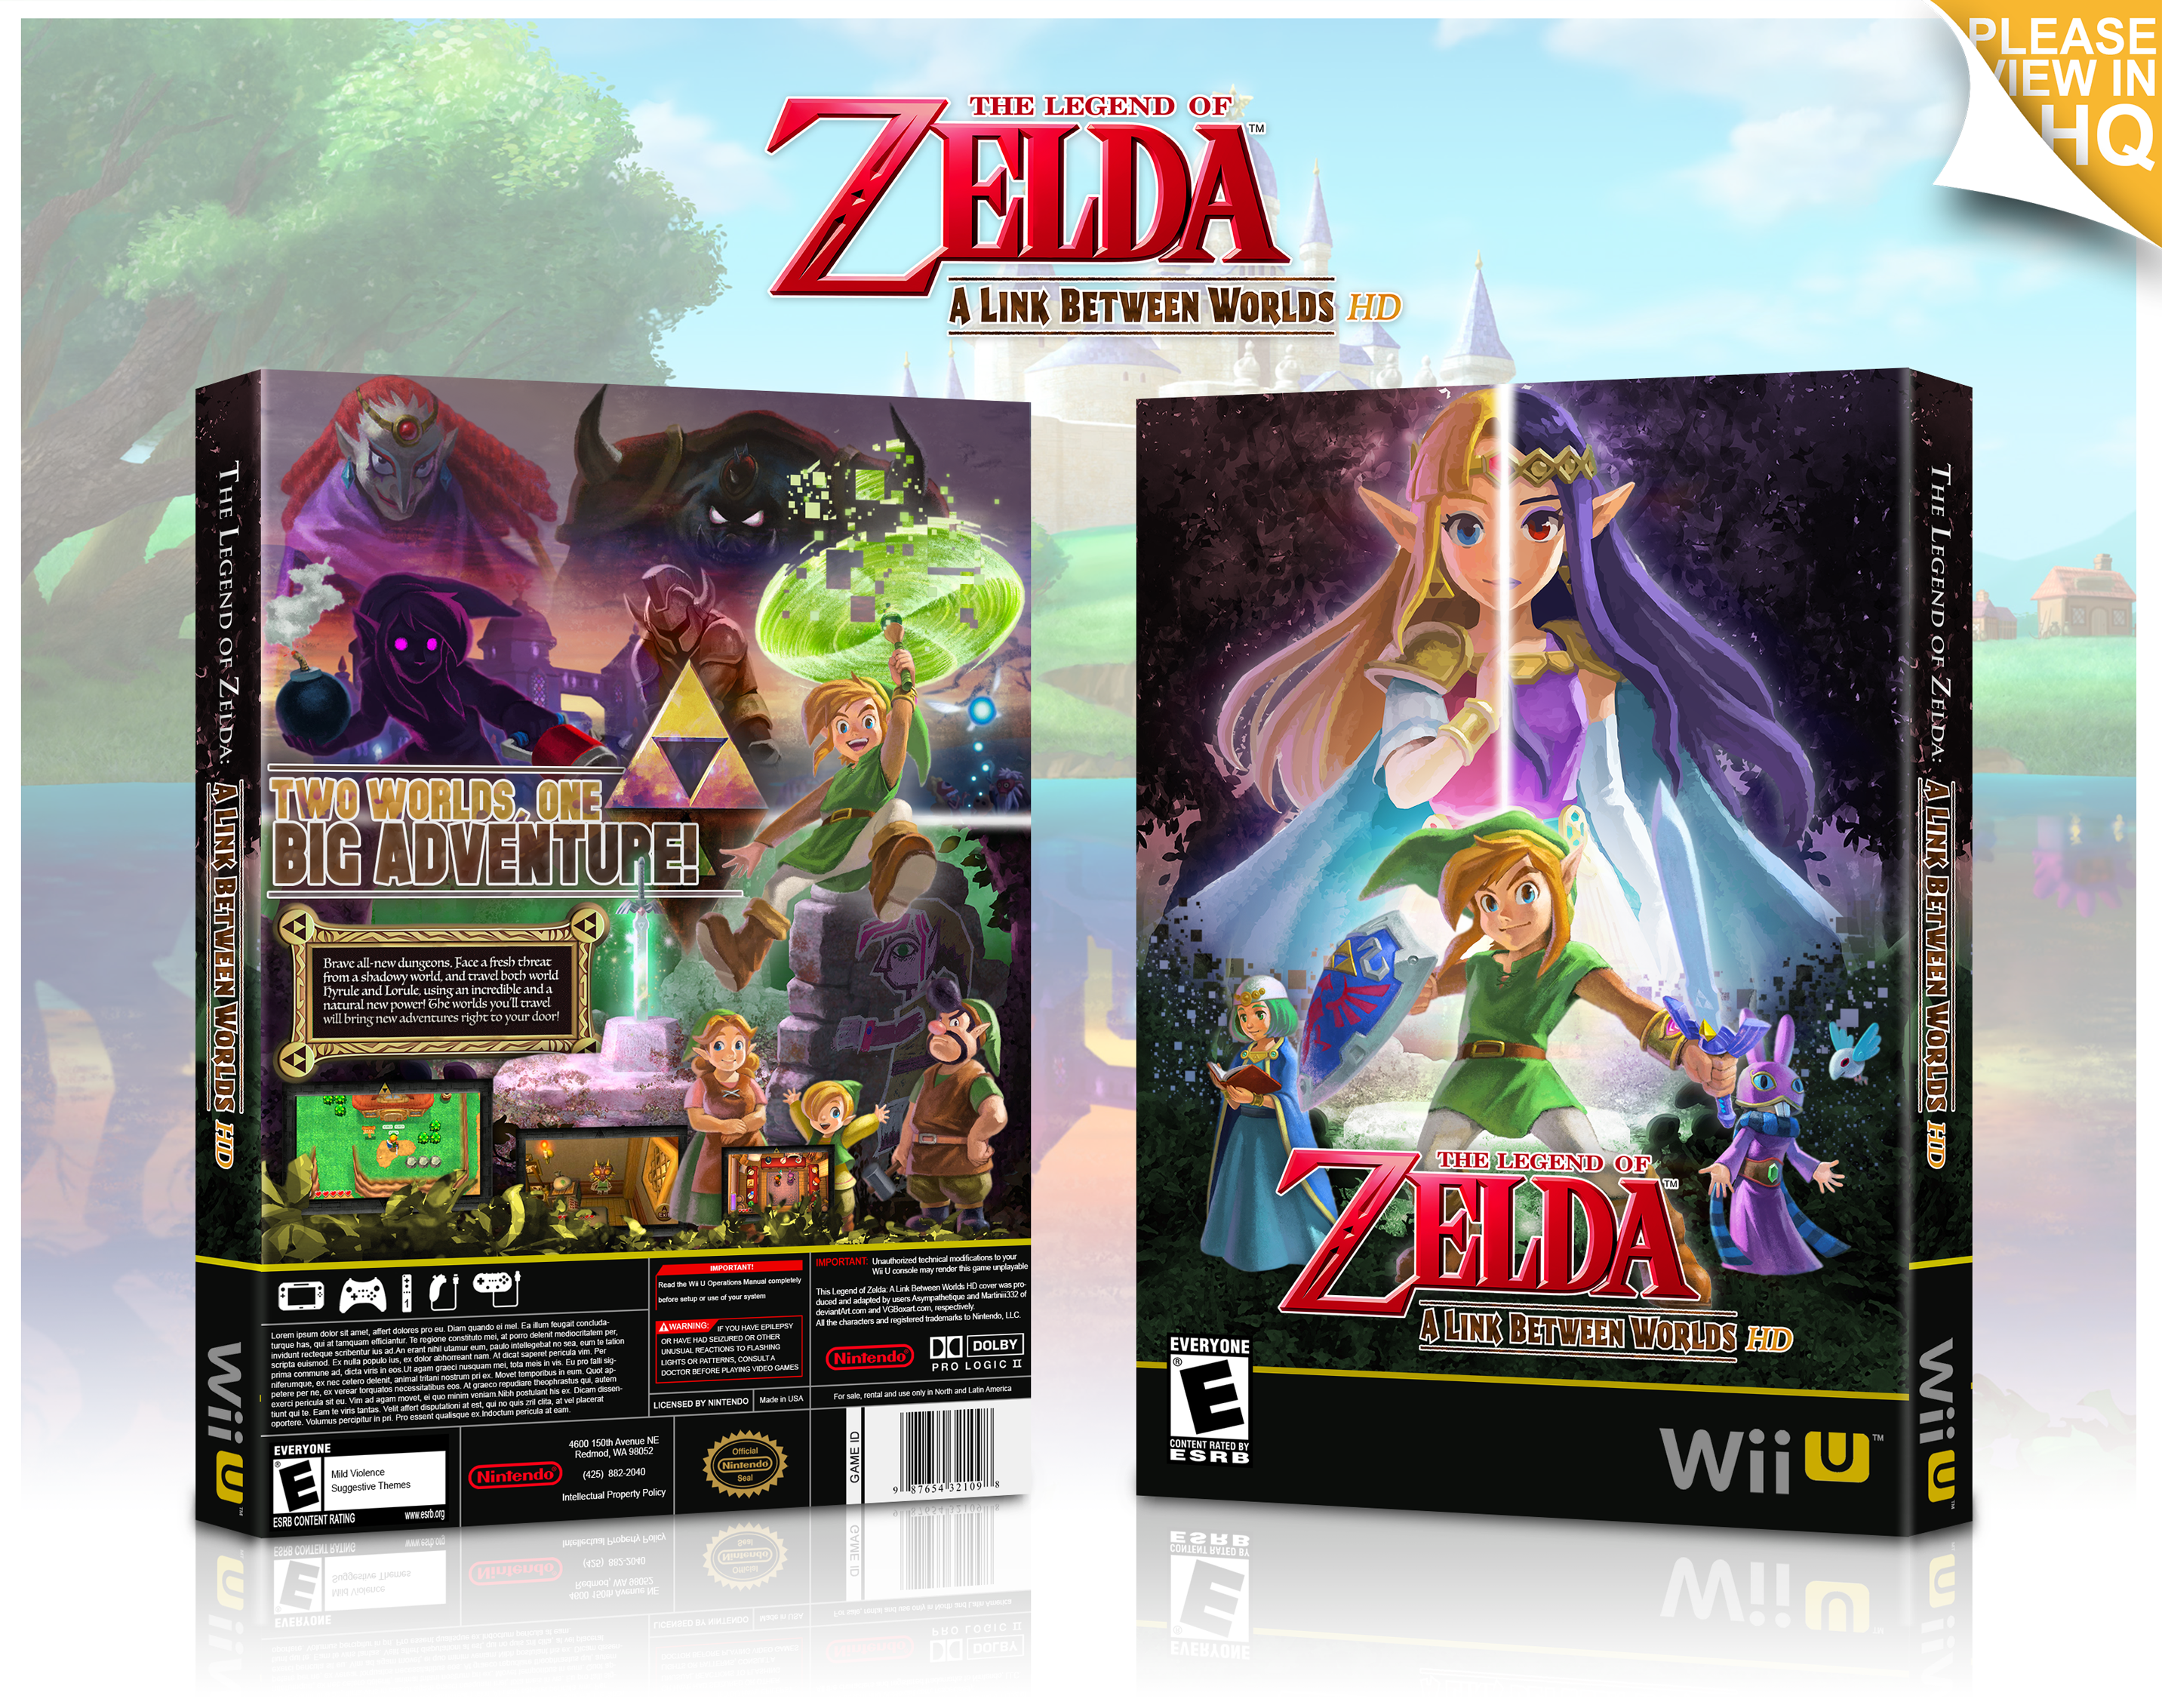 The Legend of Zelda: A Link Between Worlds HD box cover